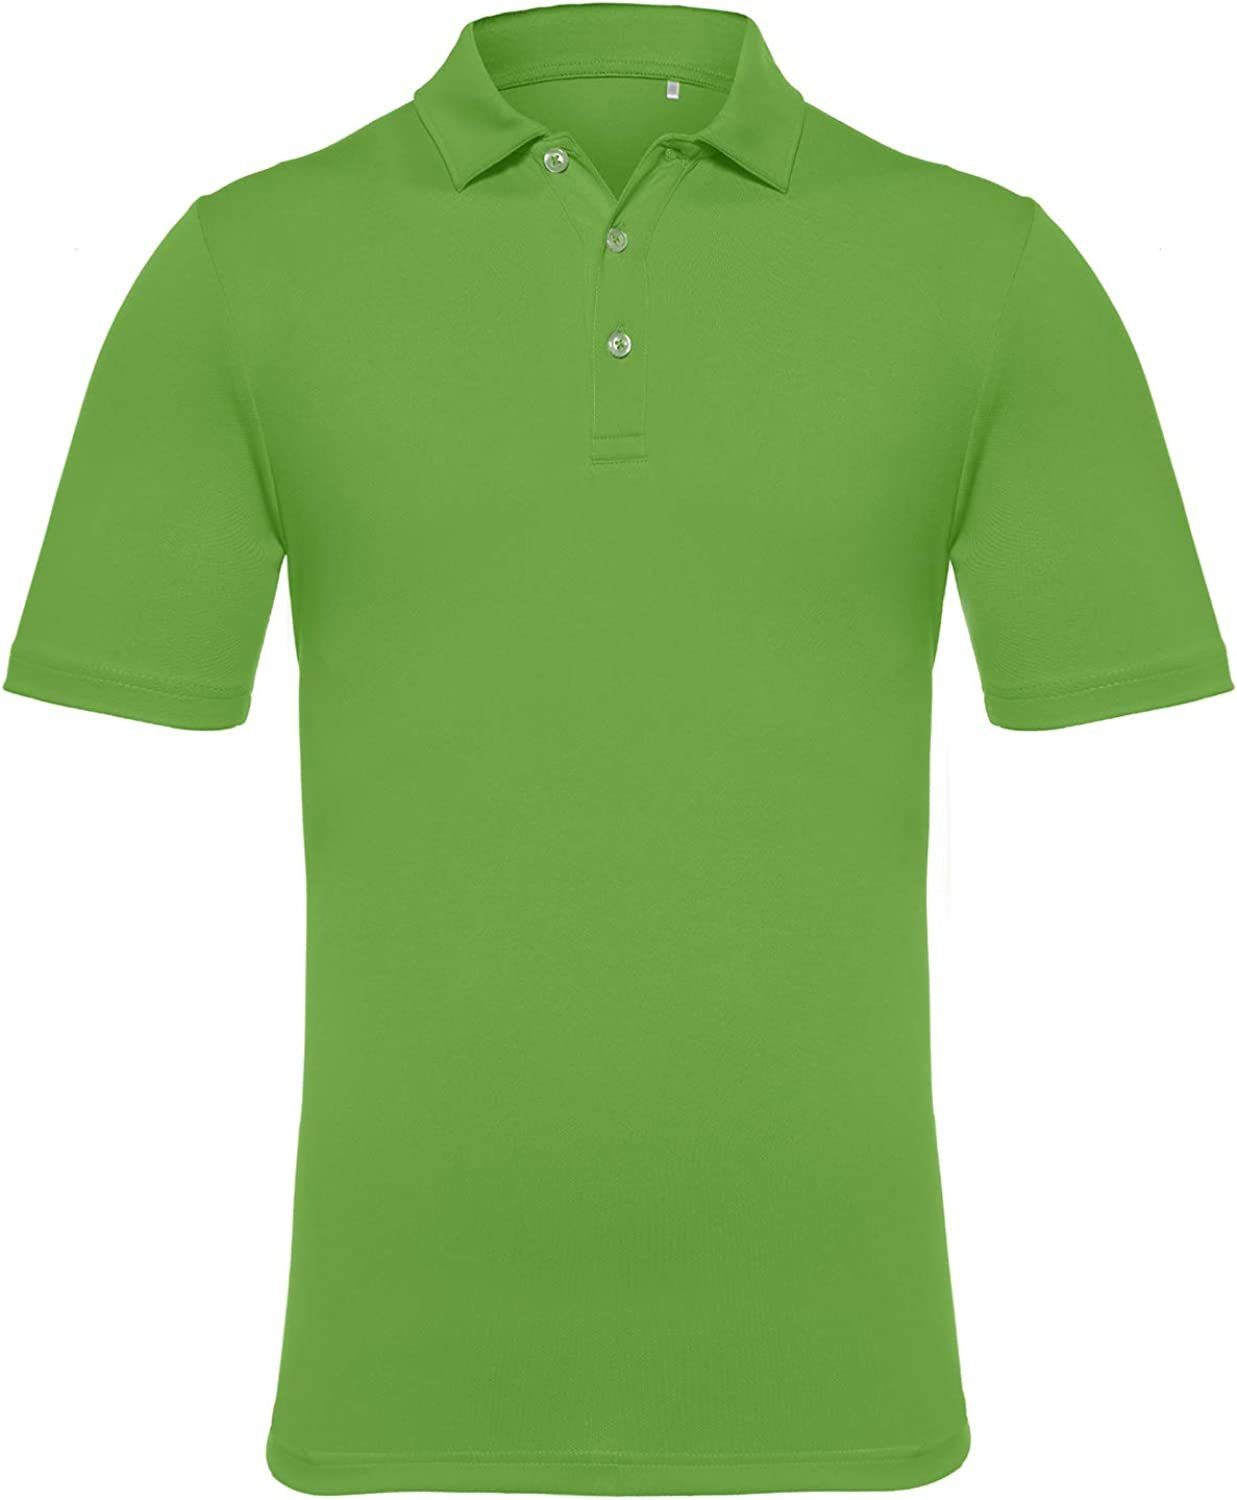 DEBAIJIA Poloshirt DEBAIJIA Herren Poloshirt Kurzarm Leicht Gemütlich Golf Standard Fit Grün